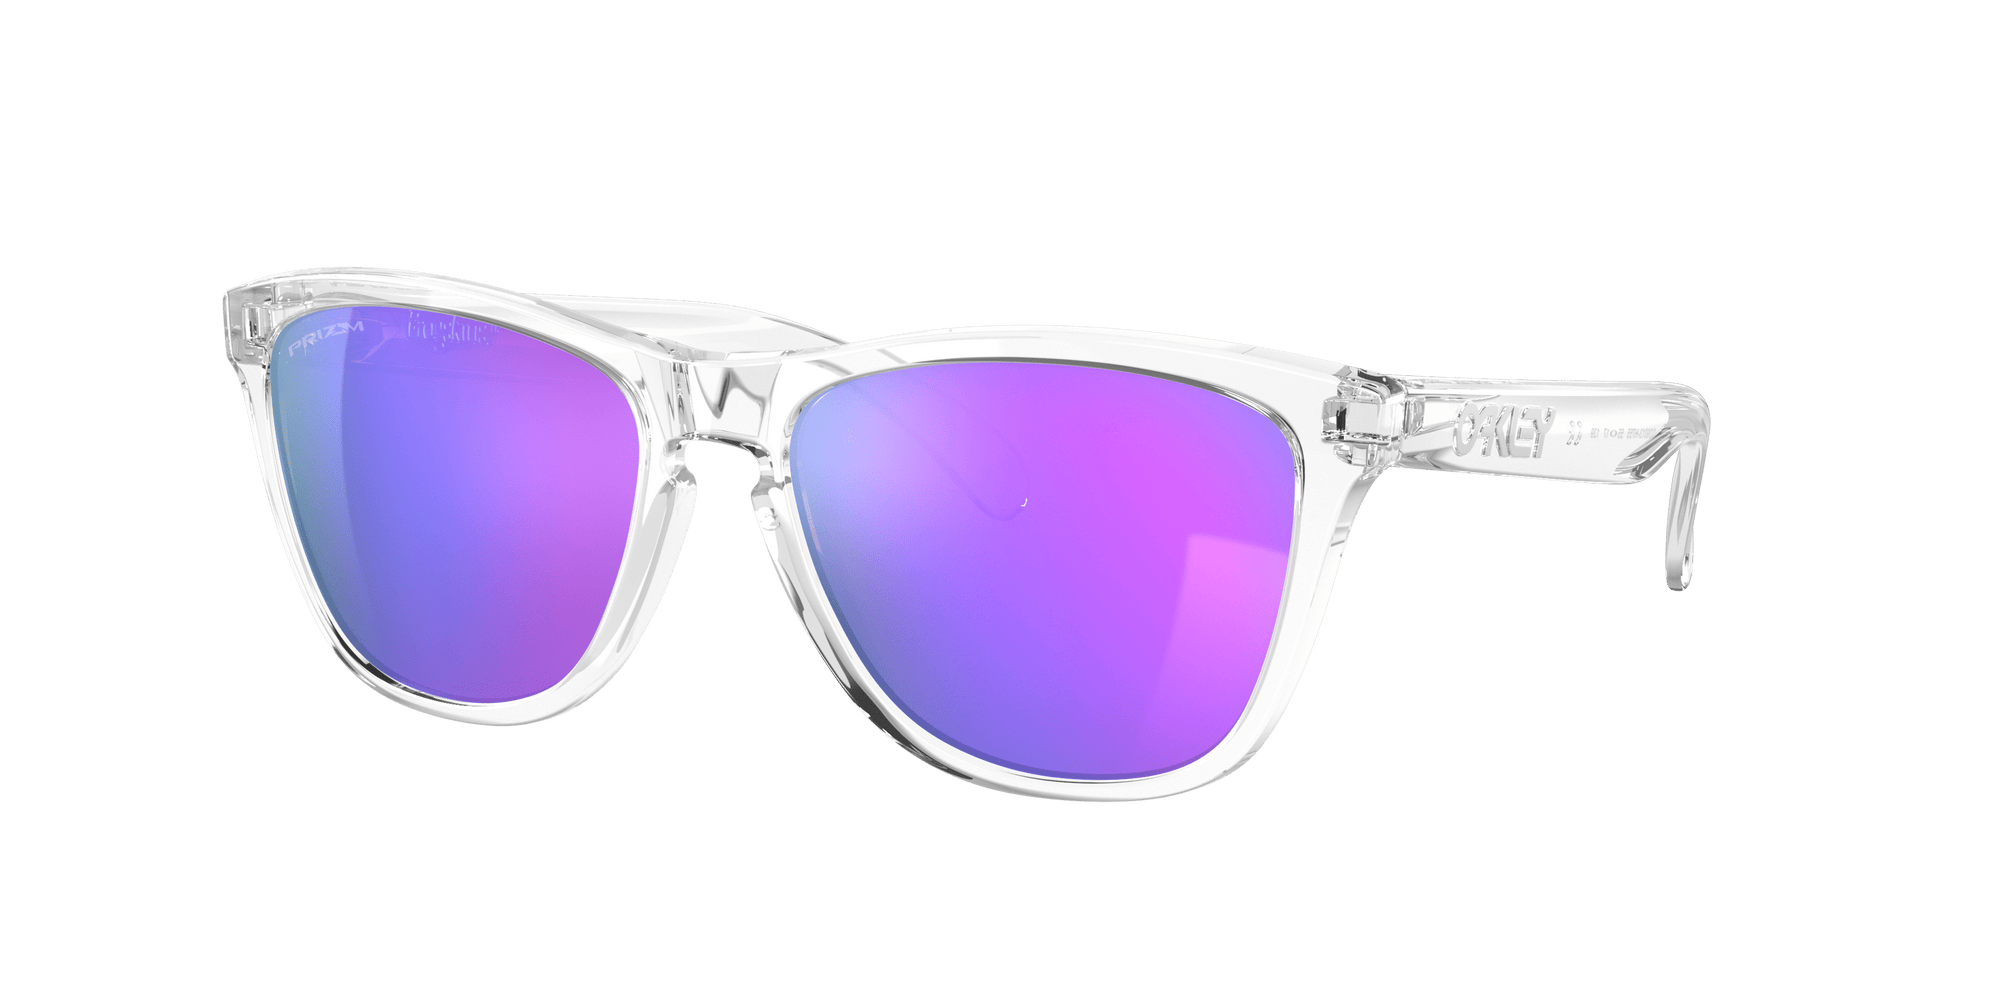 OAKLEY Frogskins Polished Clear - Prizm Violet Sunglasses Sunglasses Oakley 